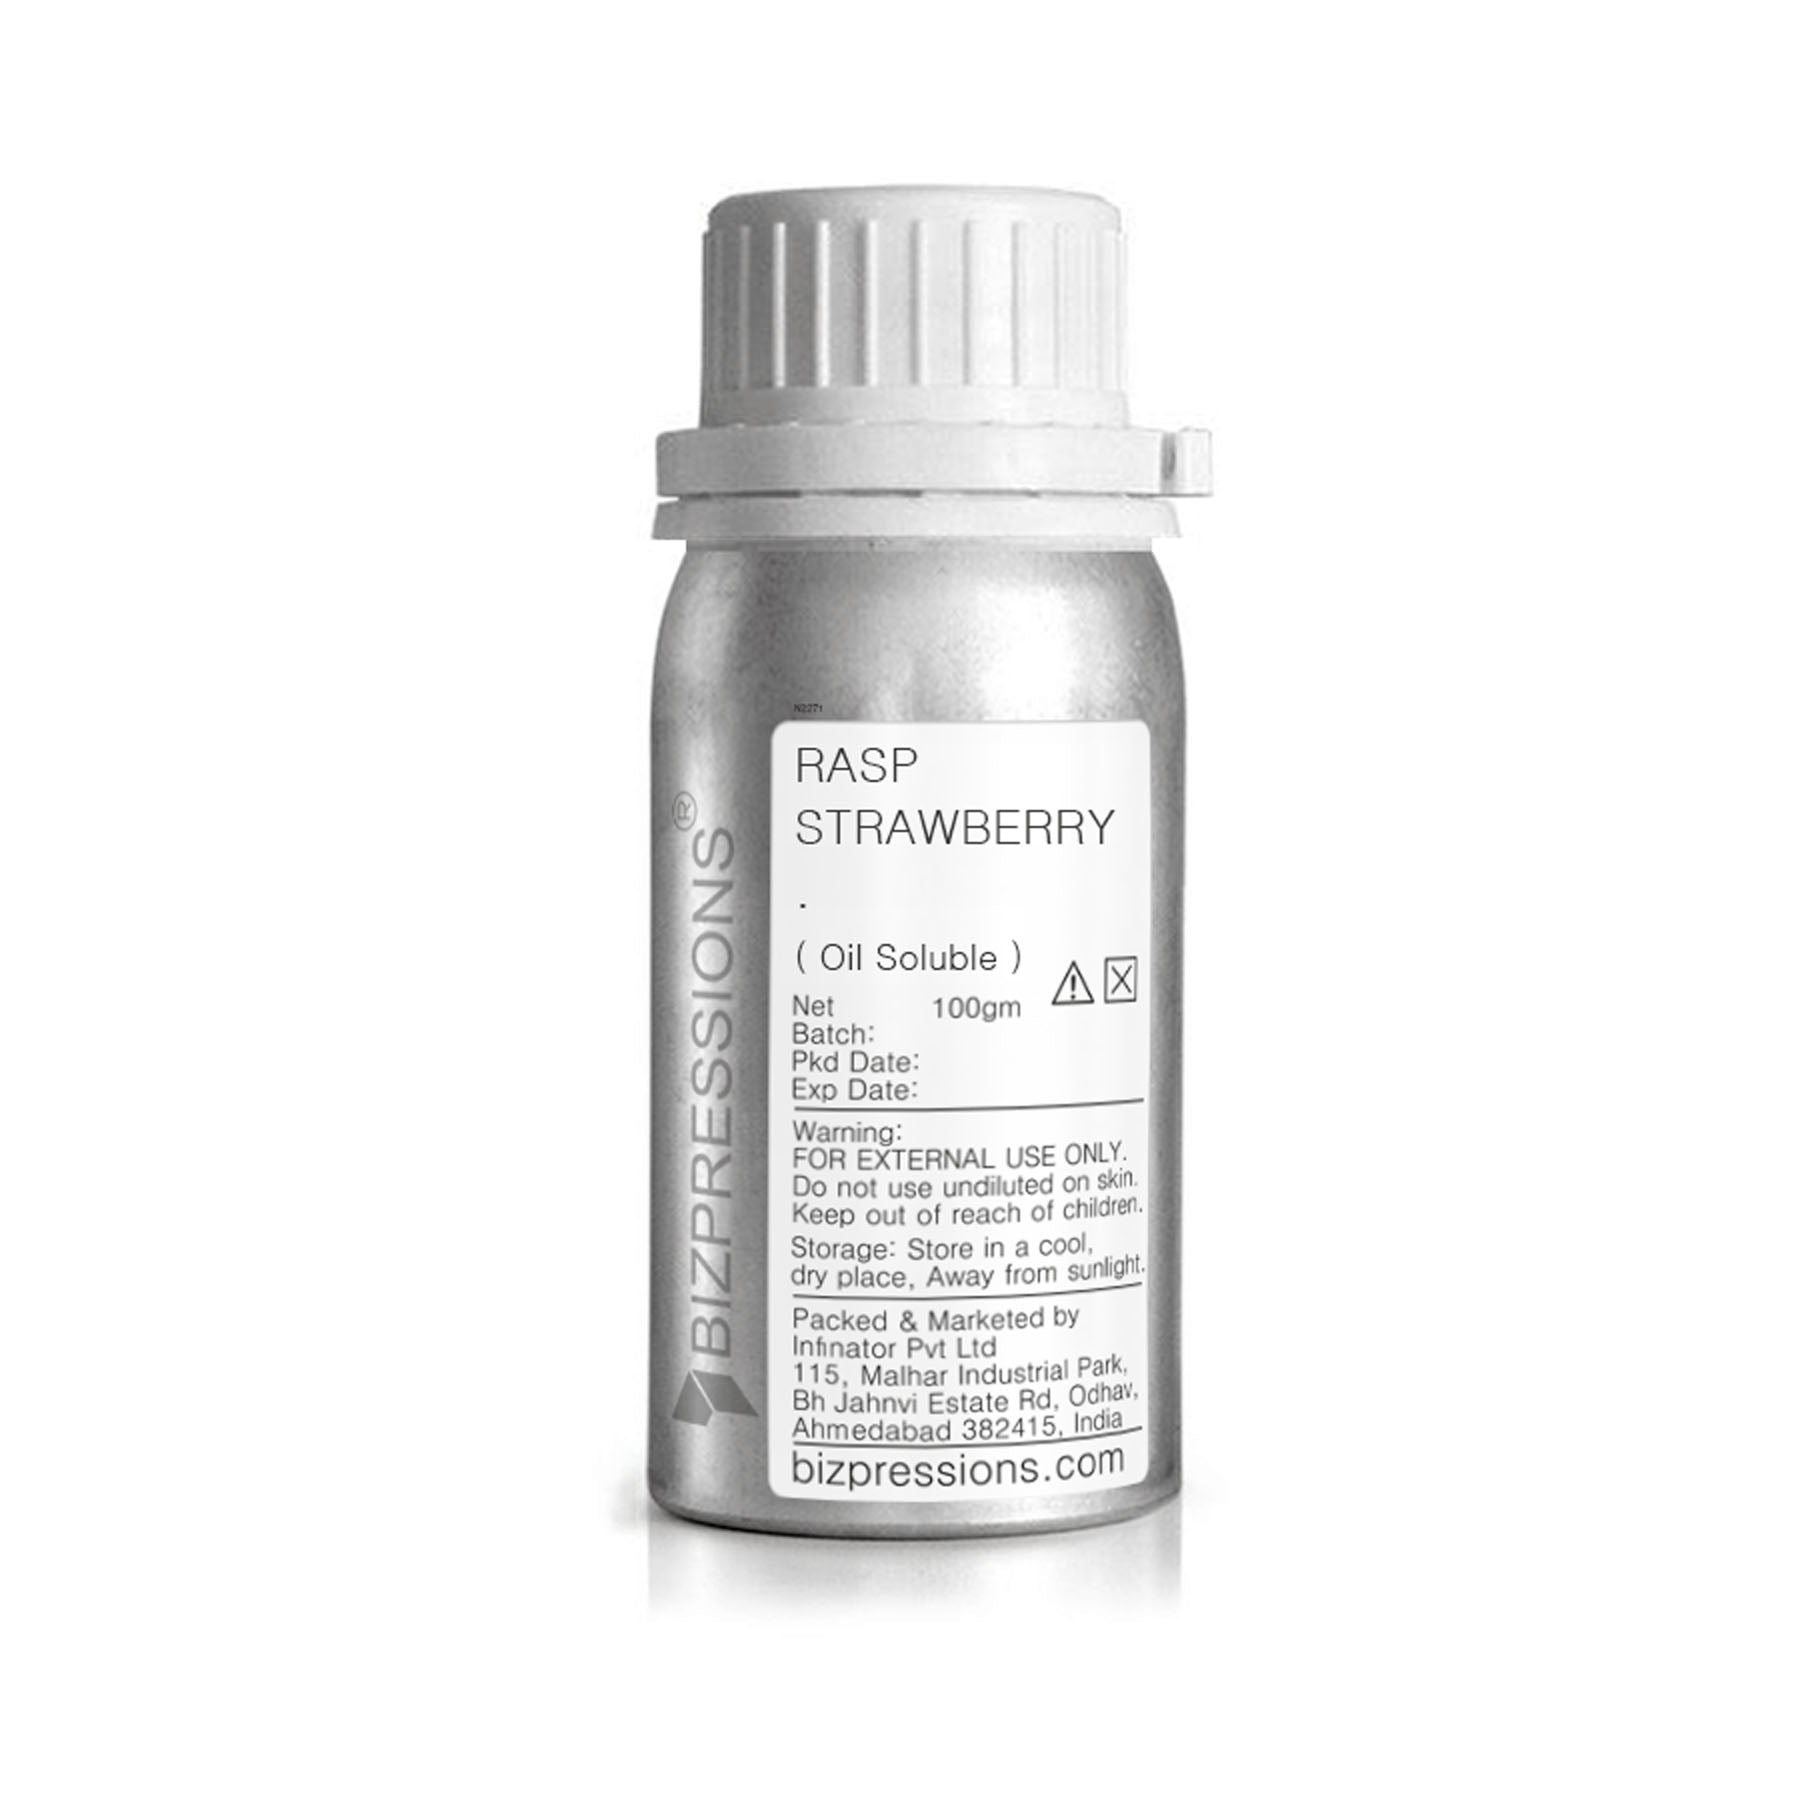 RASP STRAWBERRY - Fragrance ( Oil Soluble ) - 100 gm